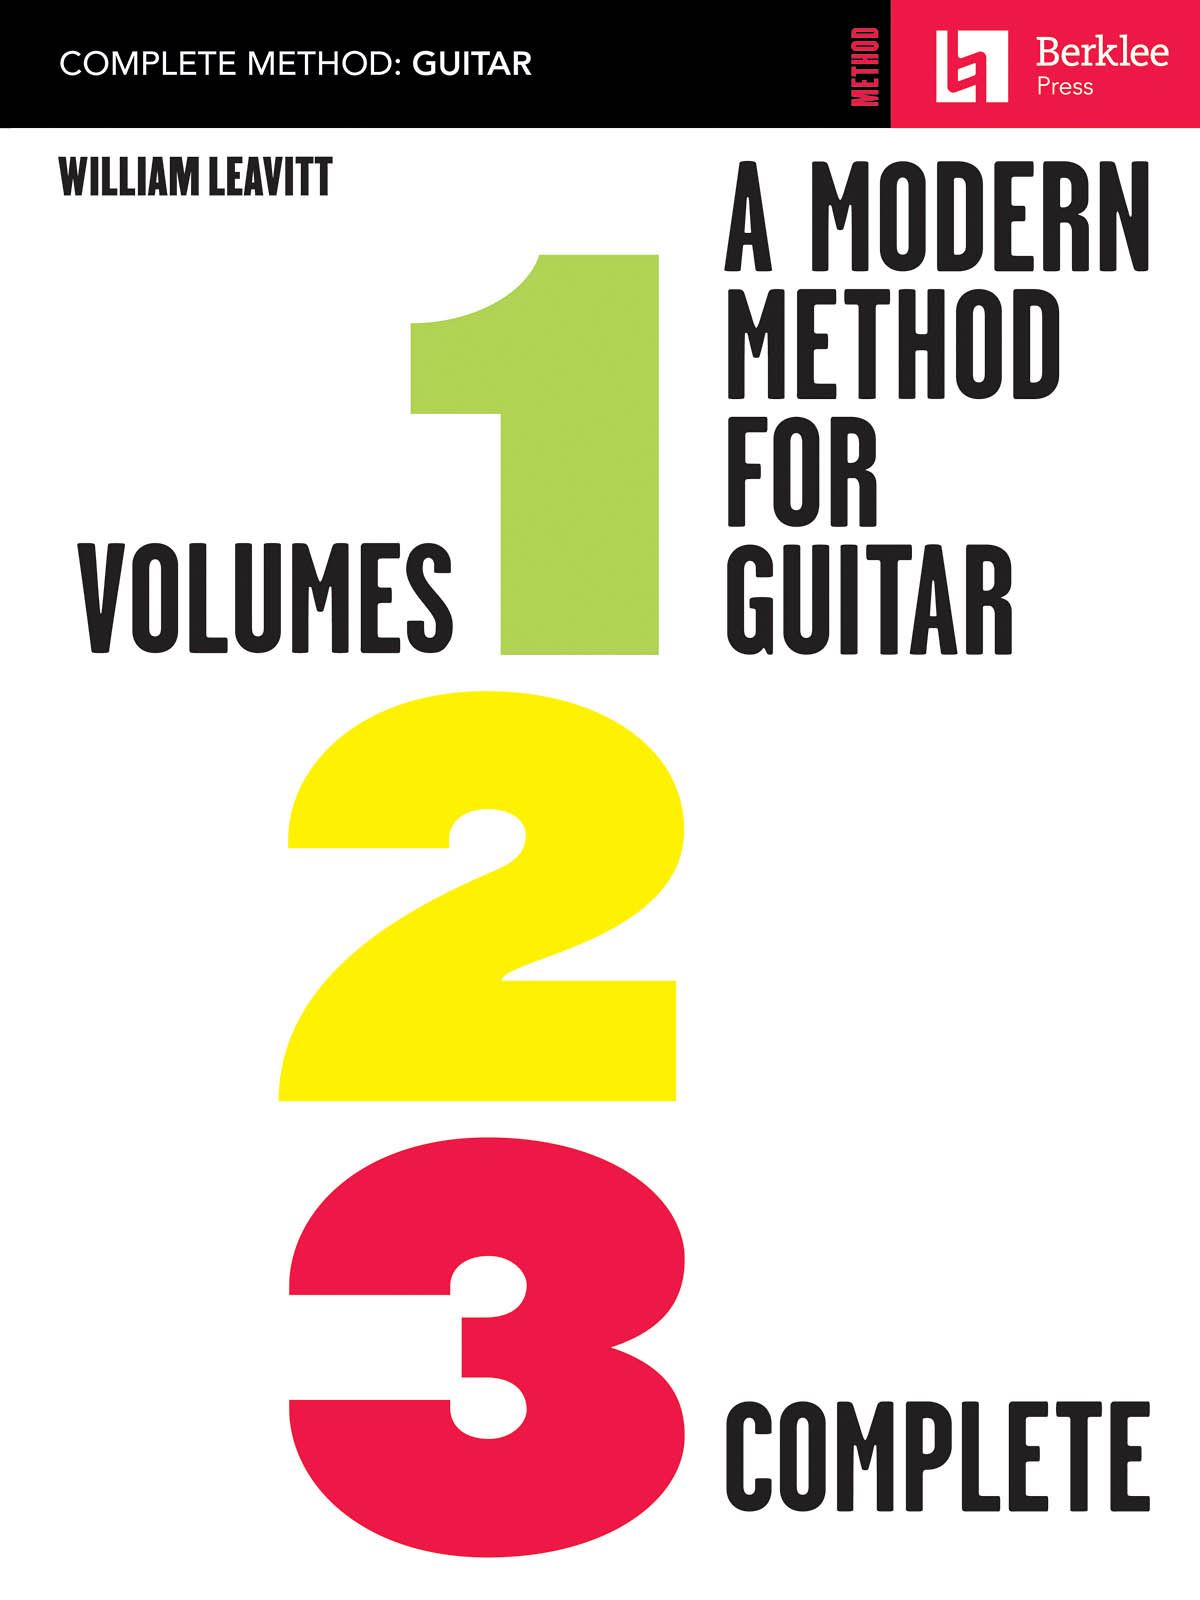 A Modern Method for Guitar - Volumes 1  2  3 Comp.: Guitar: Instrumental Tutor